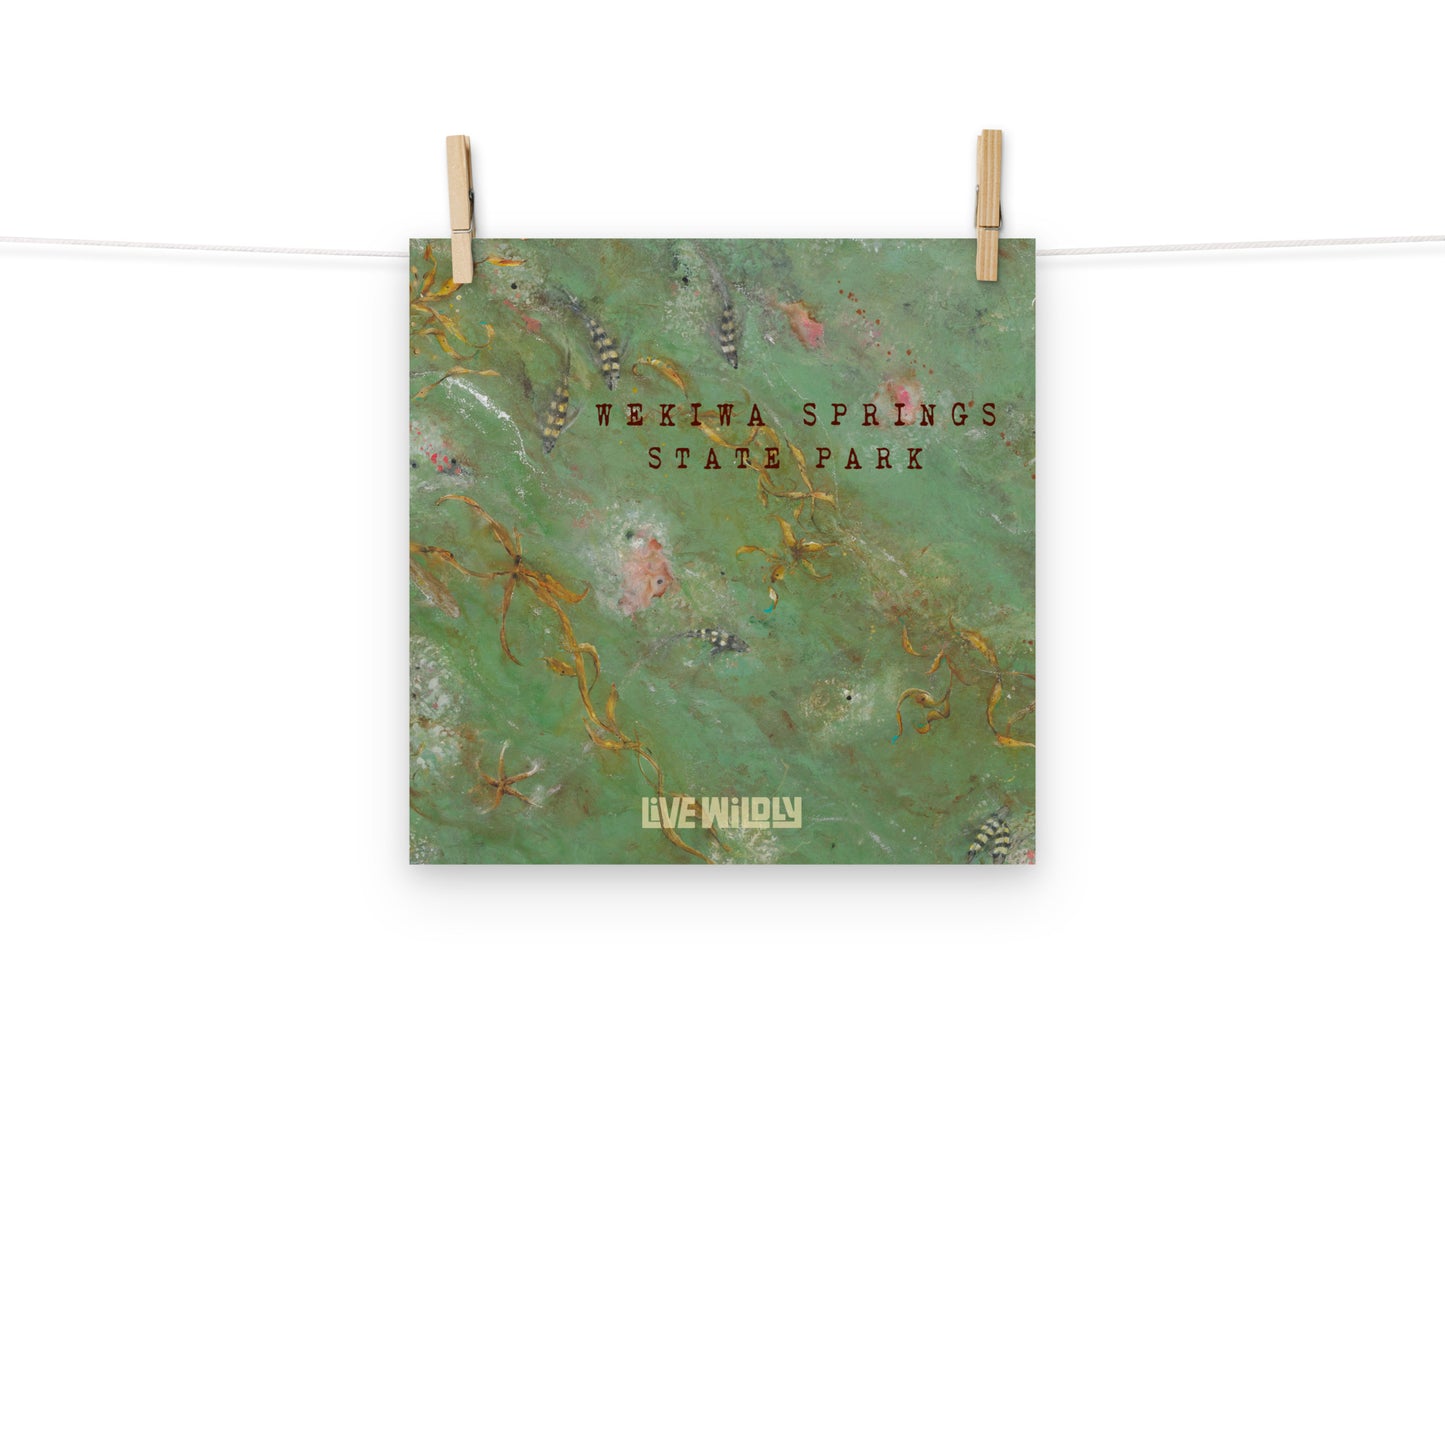 Wekiwa Springs 12"x12" Matte Print by Deborah Mitchell - Live Wildly 